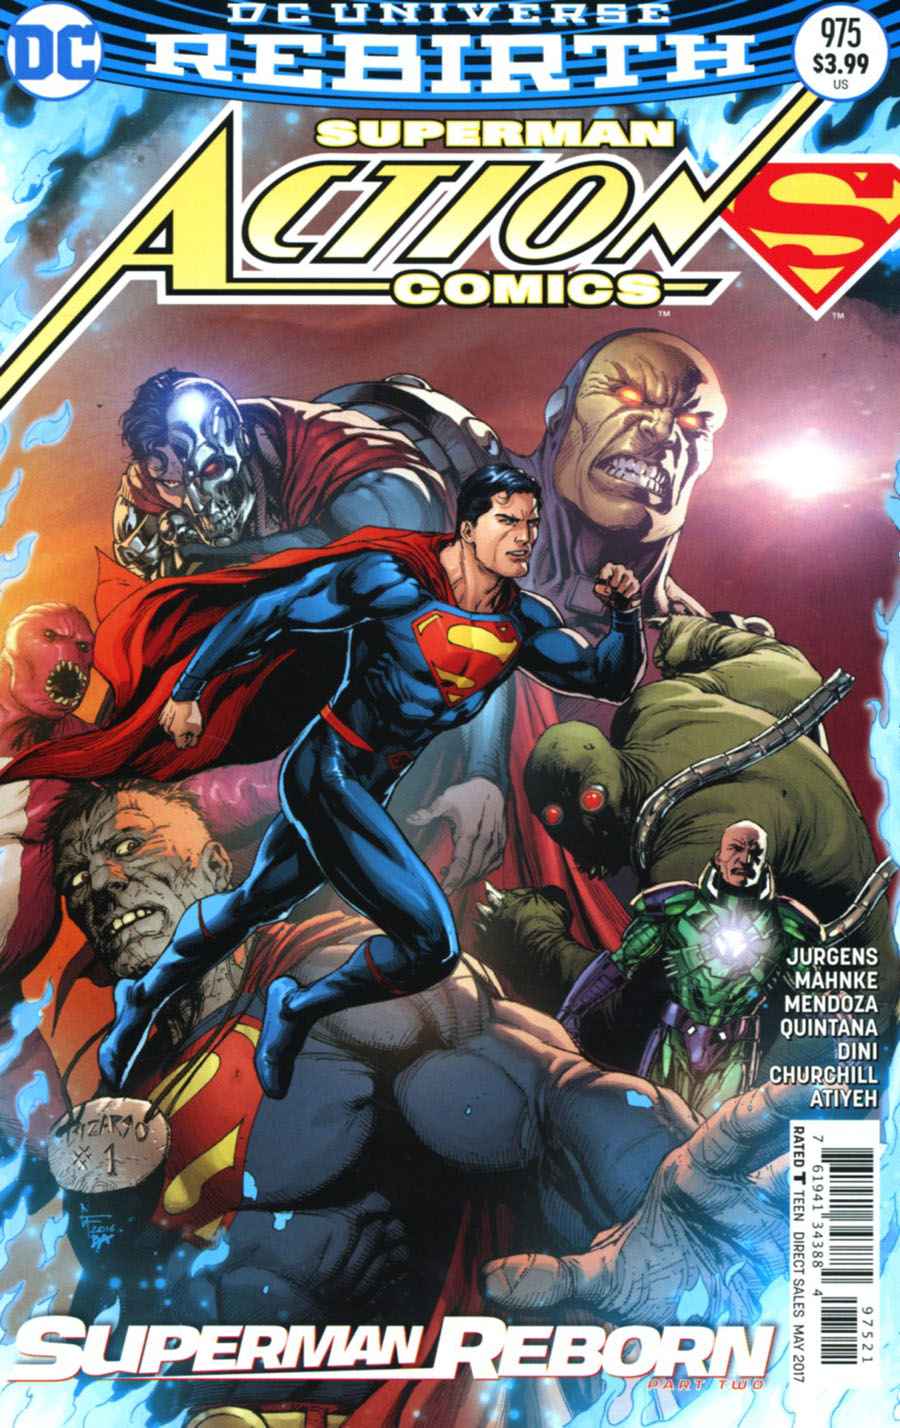 Action Comics #975